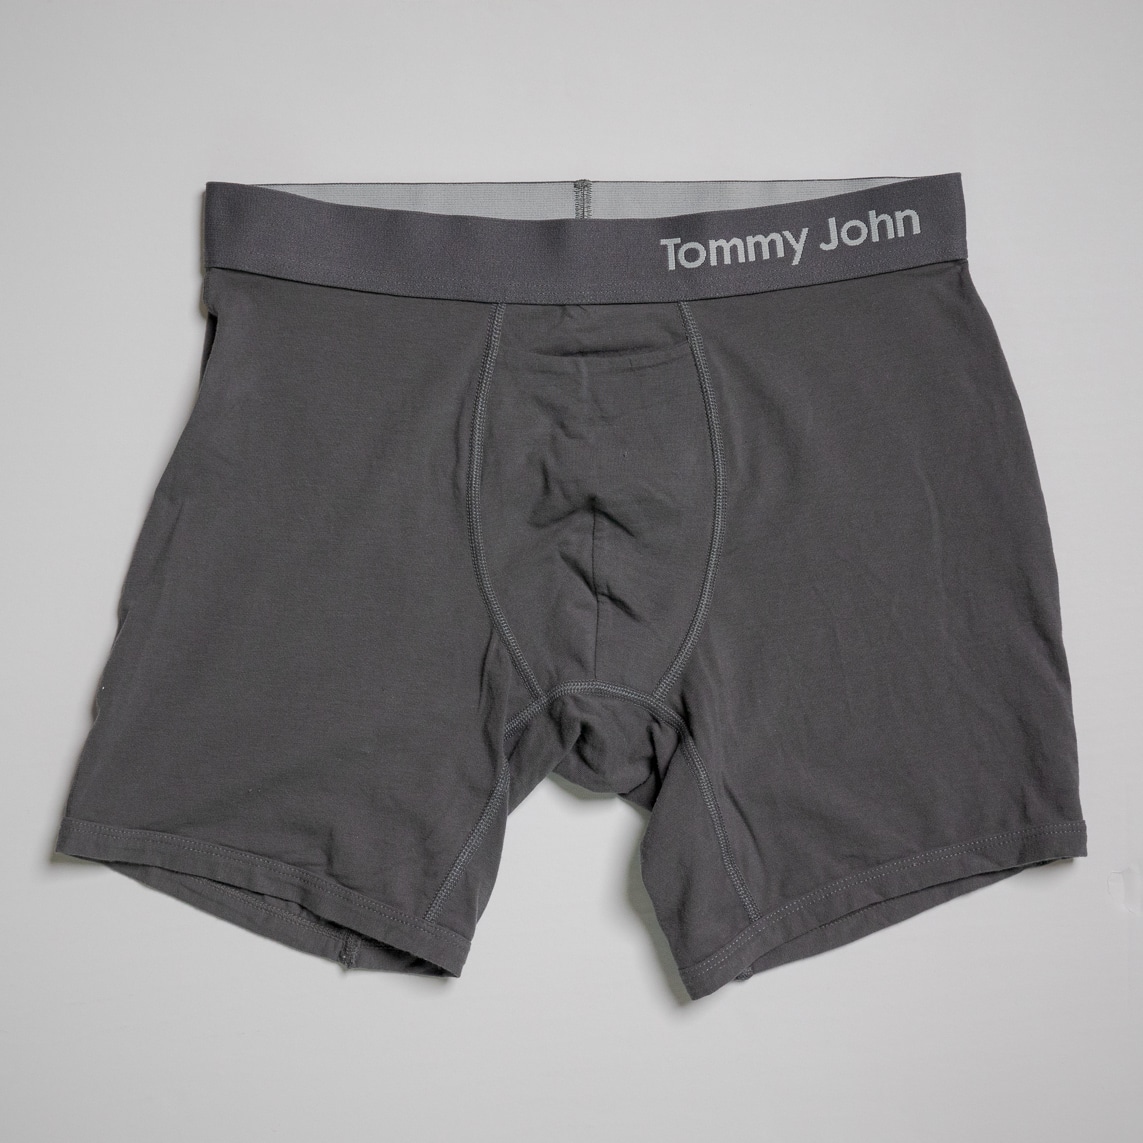 Tommy John Cool Cotton Boyshorts Review 2020 - Best Underwear